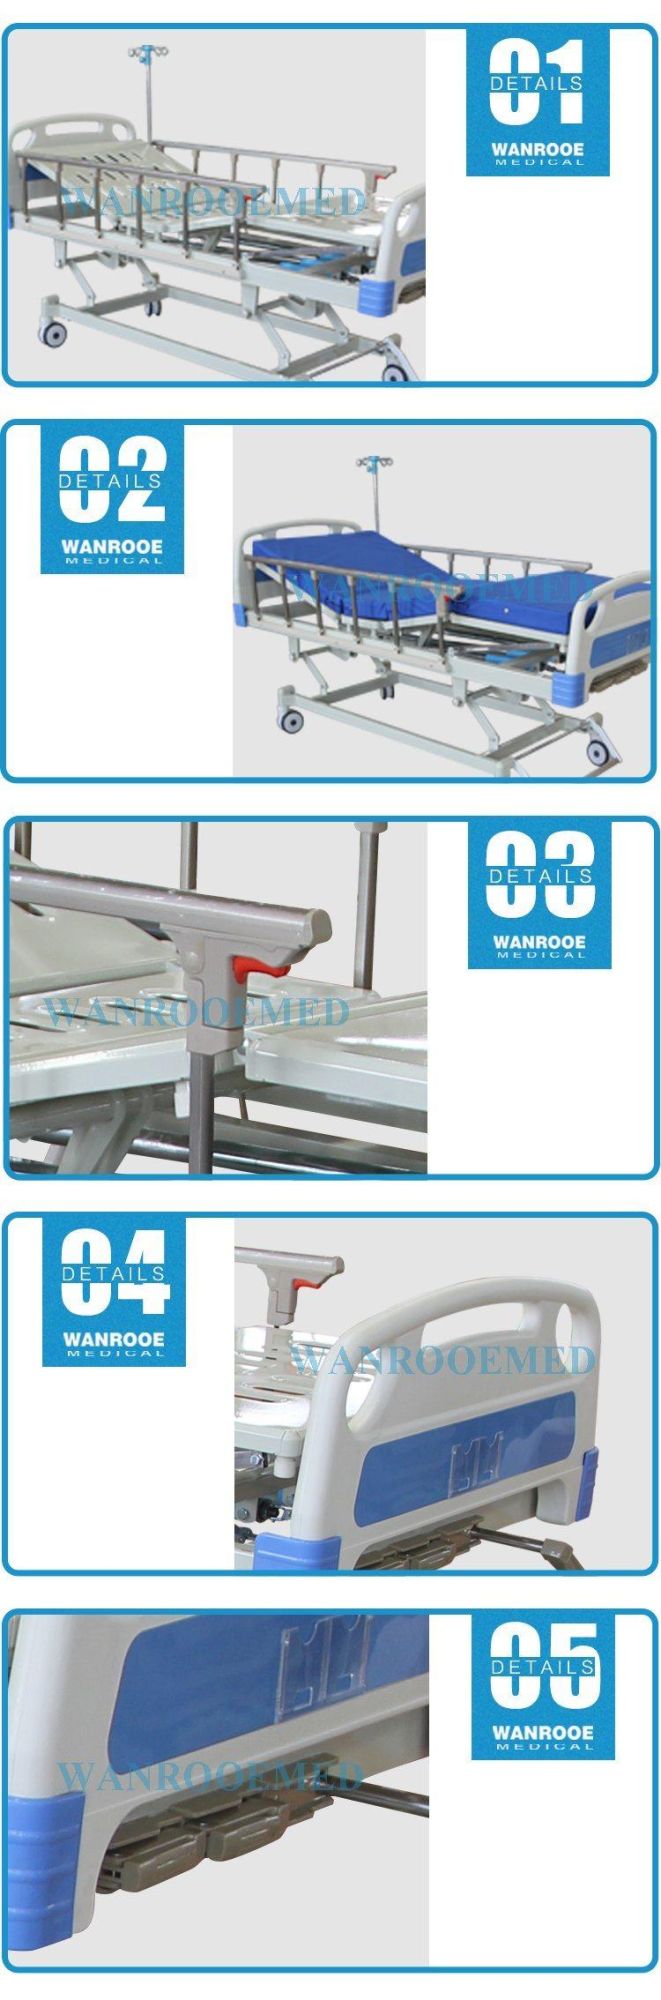 Bam302b Hospital Furniture 3 Crank Manual Bed with Foldaway Railings